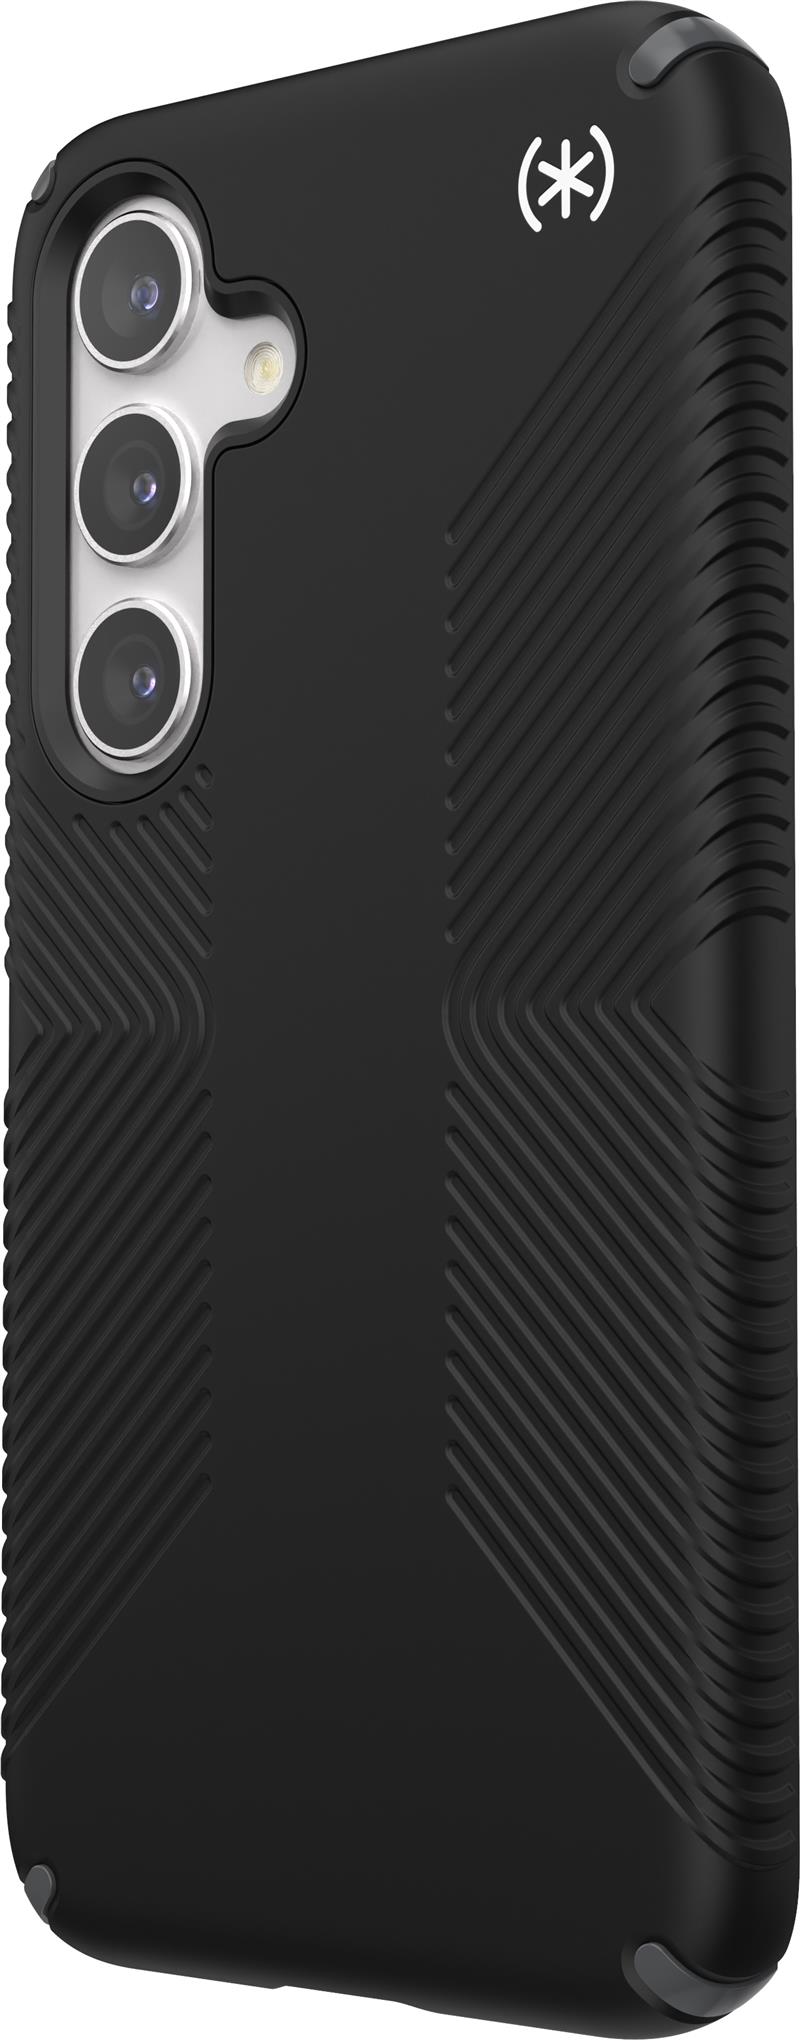 Speck Presidio2 Grip Samsung Galaxy S24 Black - with Microban